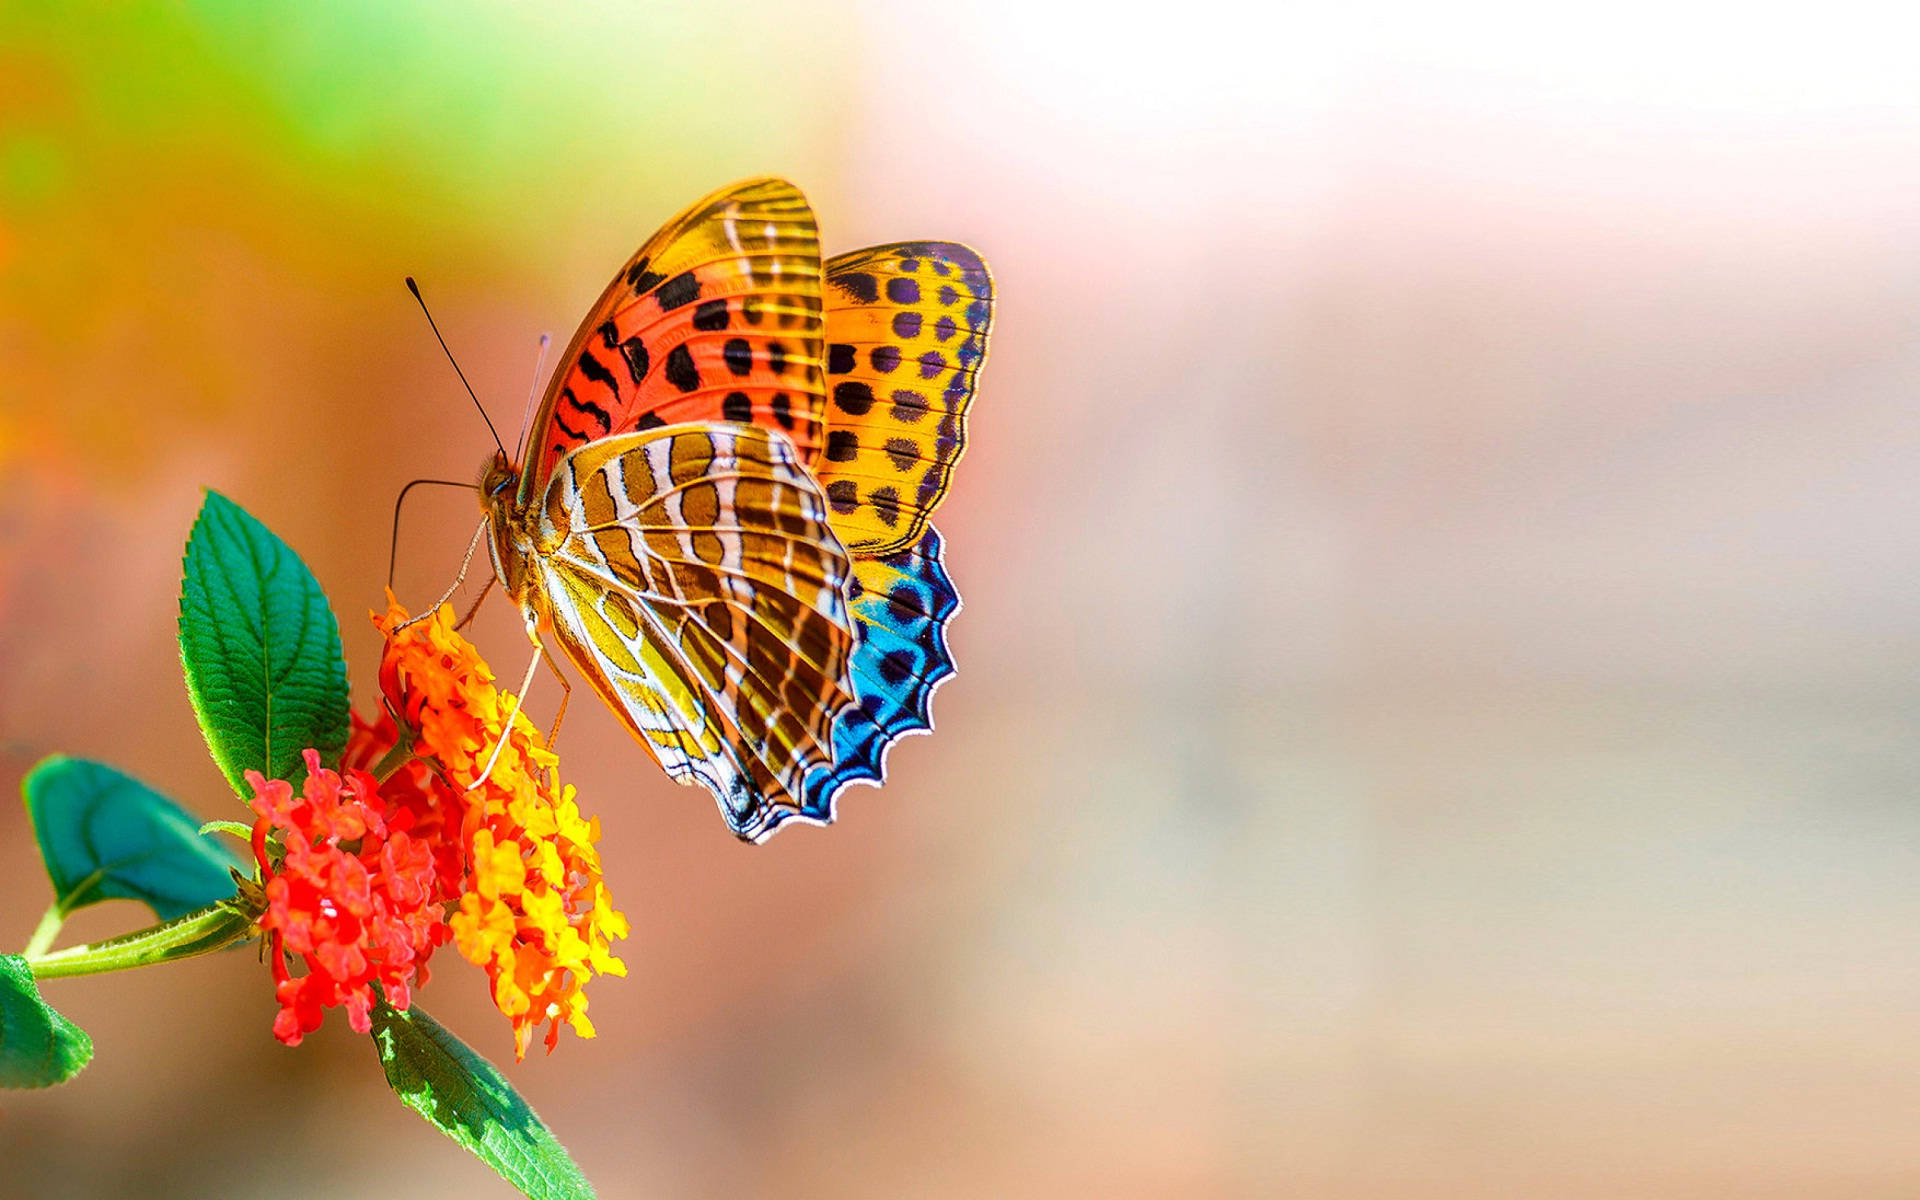 Download Colorful Butterfly Full Screen Hd Desktop Wallpaper | Wallpapers .com